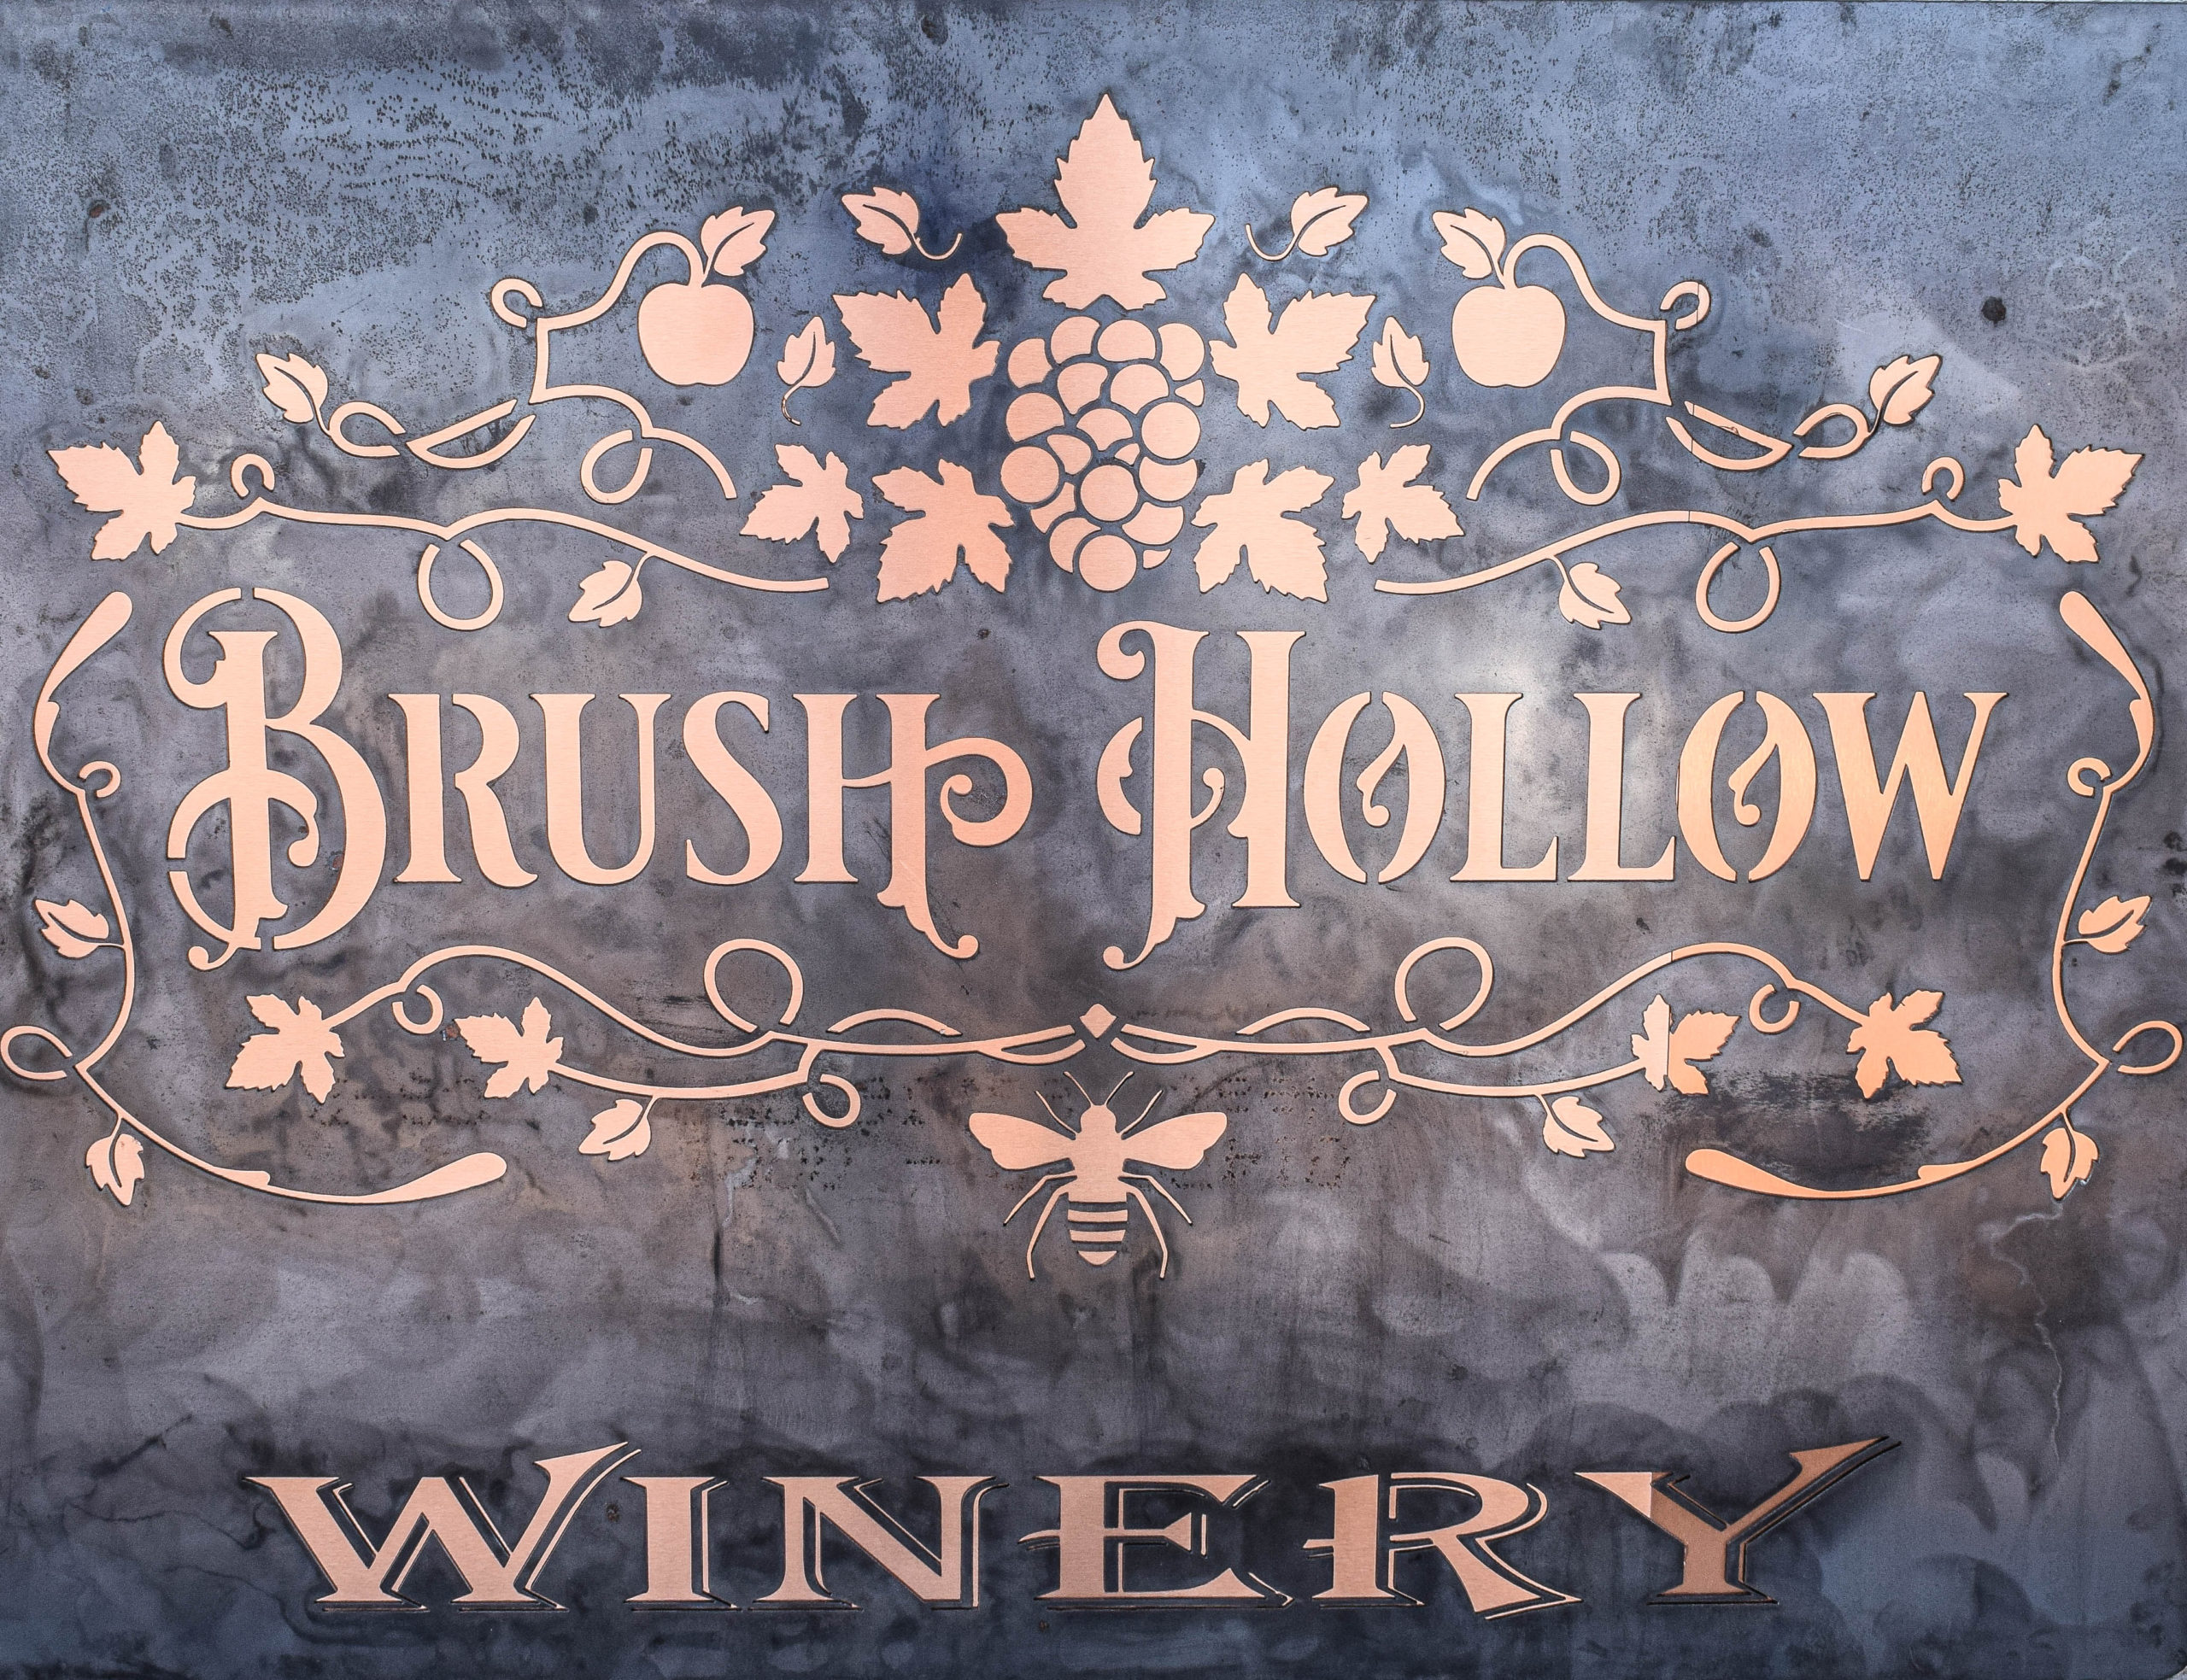 Brush Hollow Winery